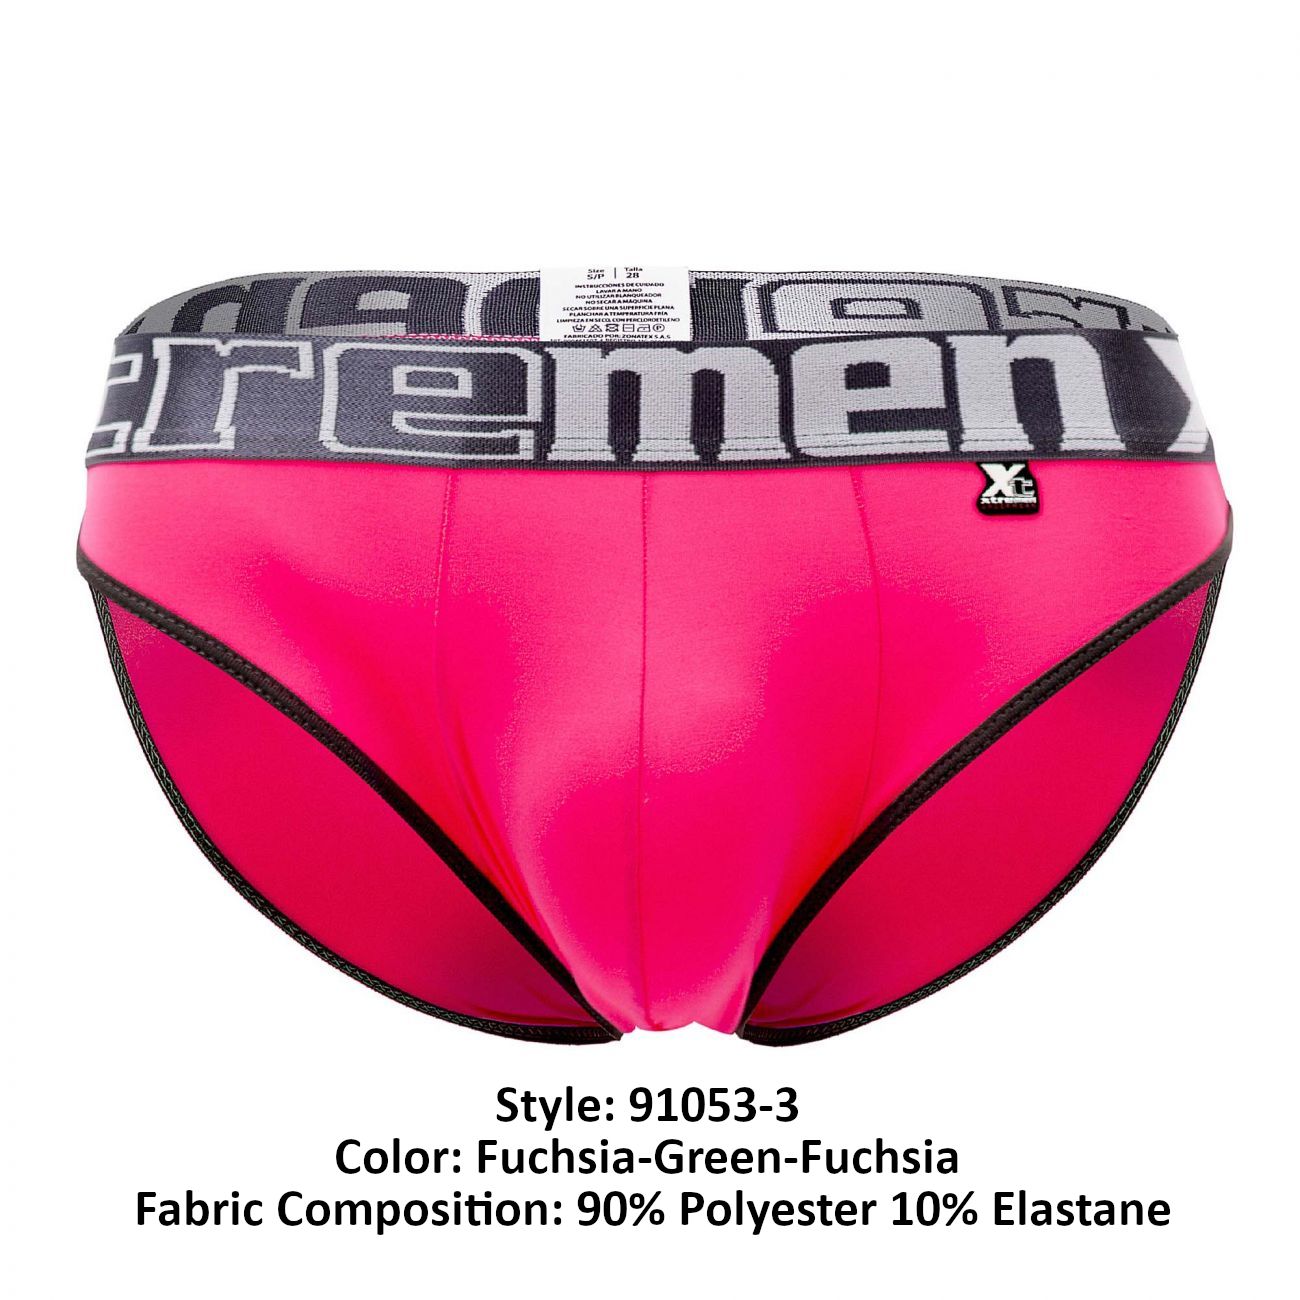 Xtremen 91053-3 3PK Briefs Fuchsia-Green-Fuchsia